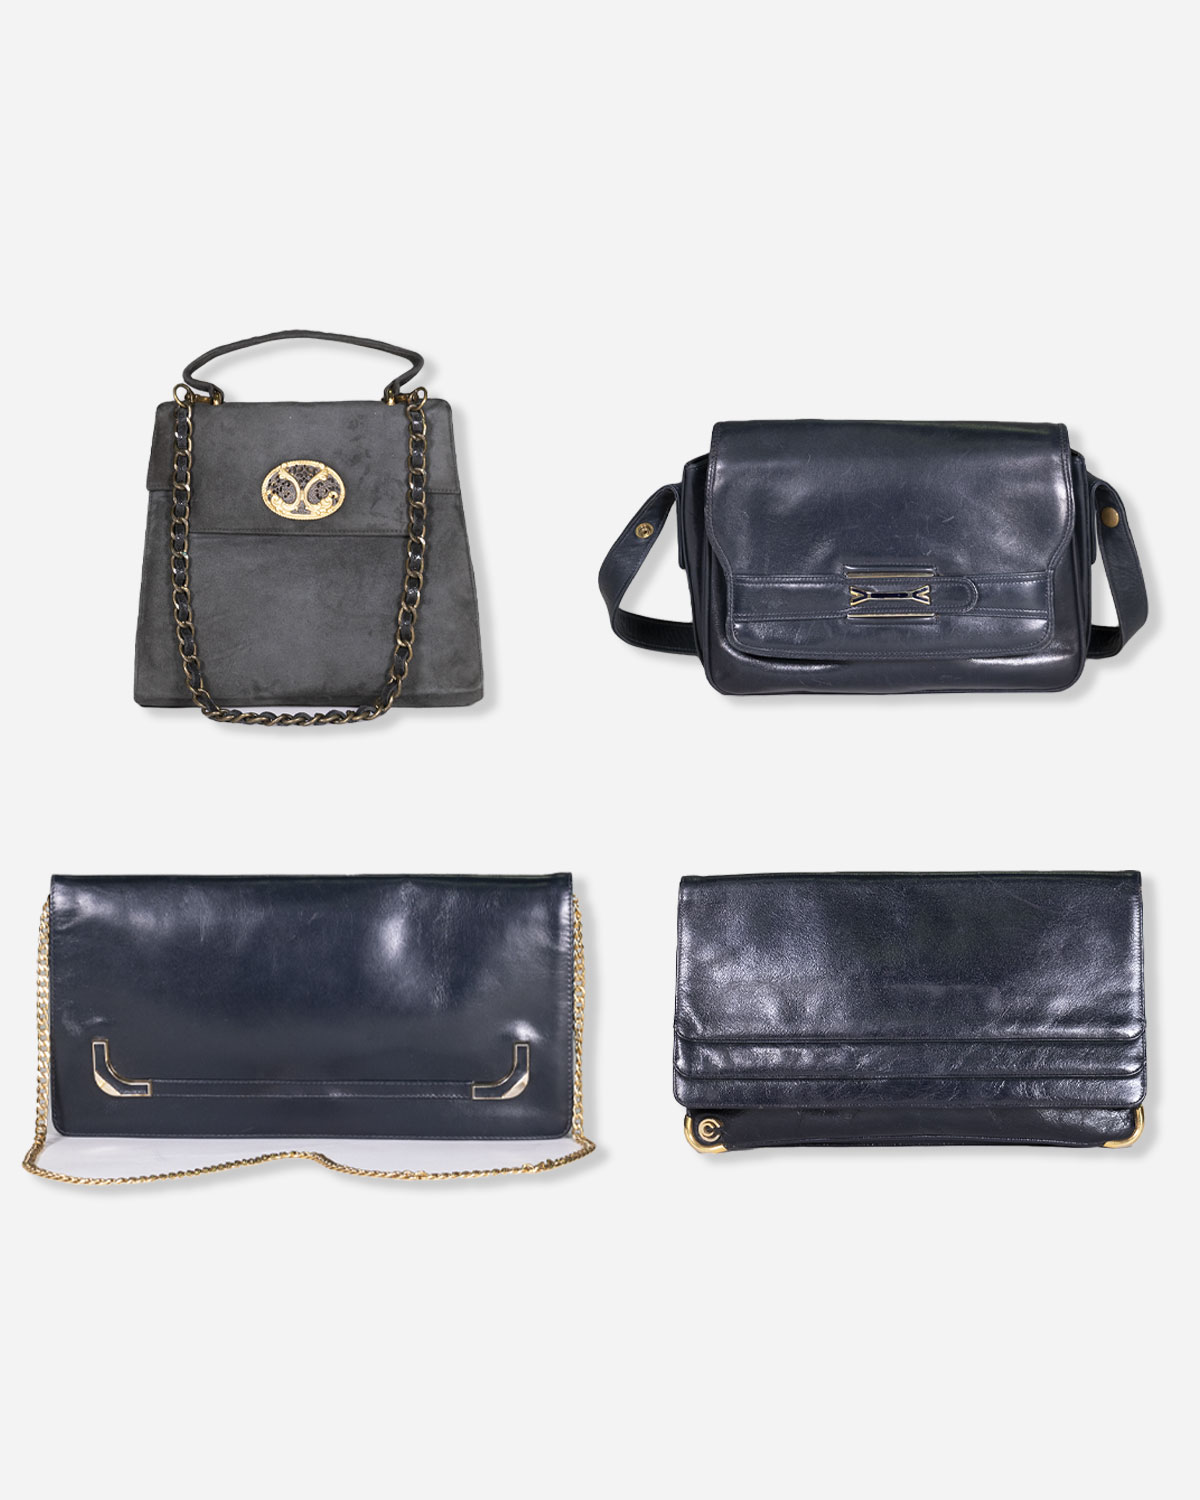 Vintage 80s leather handbags: 4 pieces